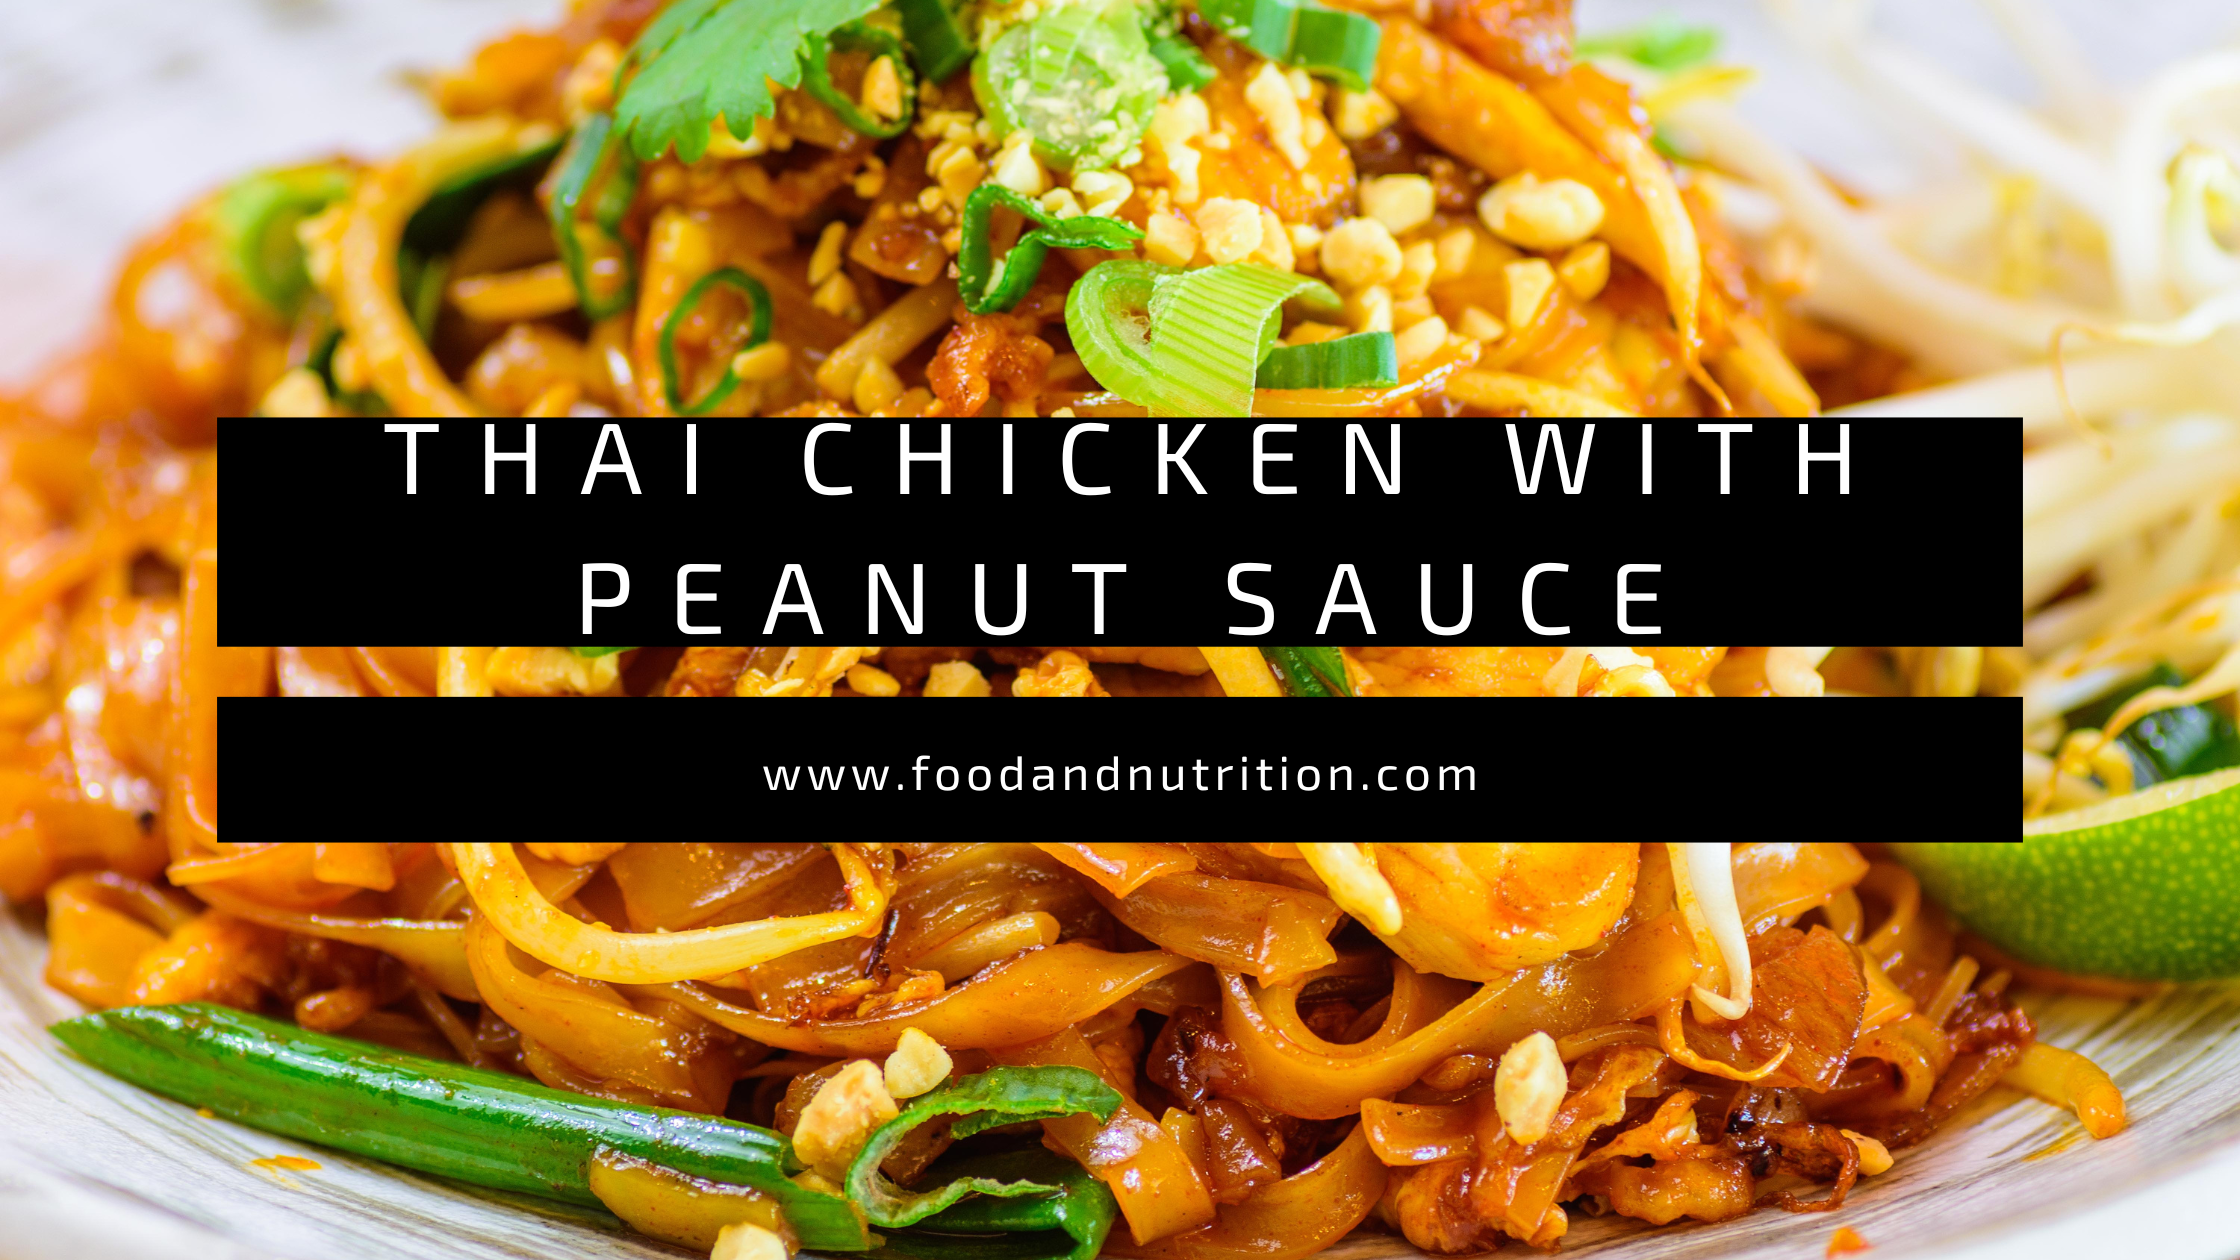 Thai Chicken with Peanut Sauce: A Flavorful Journey into Thai Cuisine